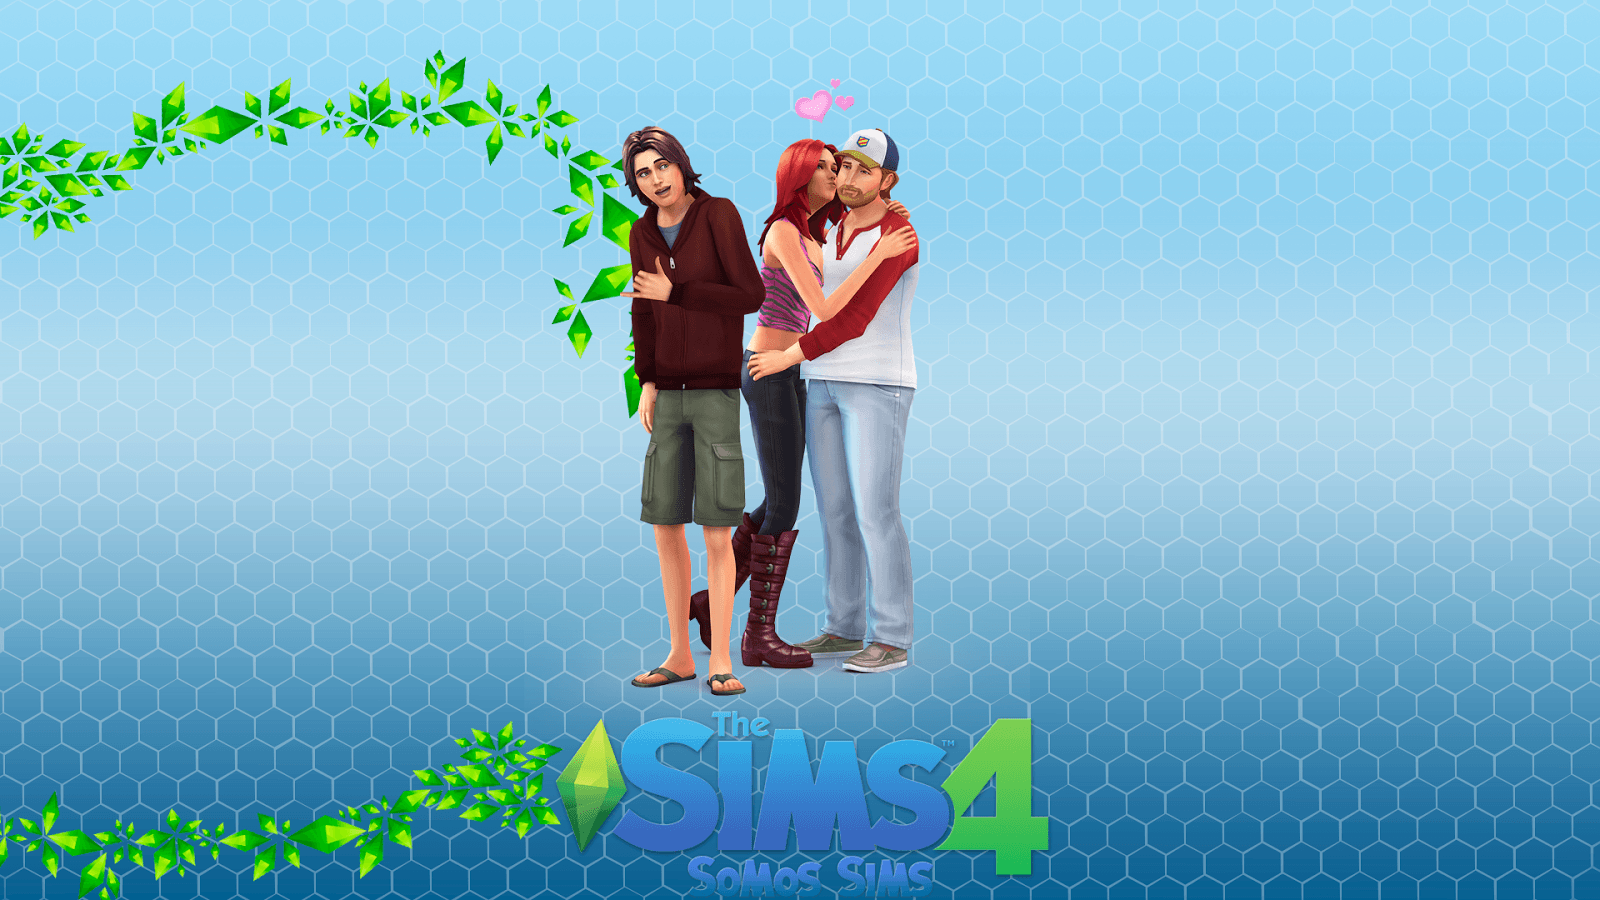 Sims 4 Wallpaper Games Online HD